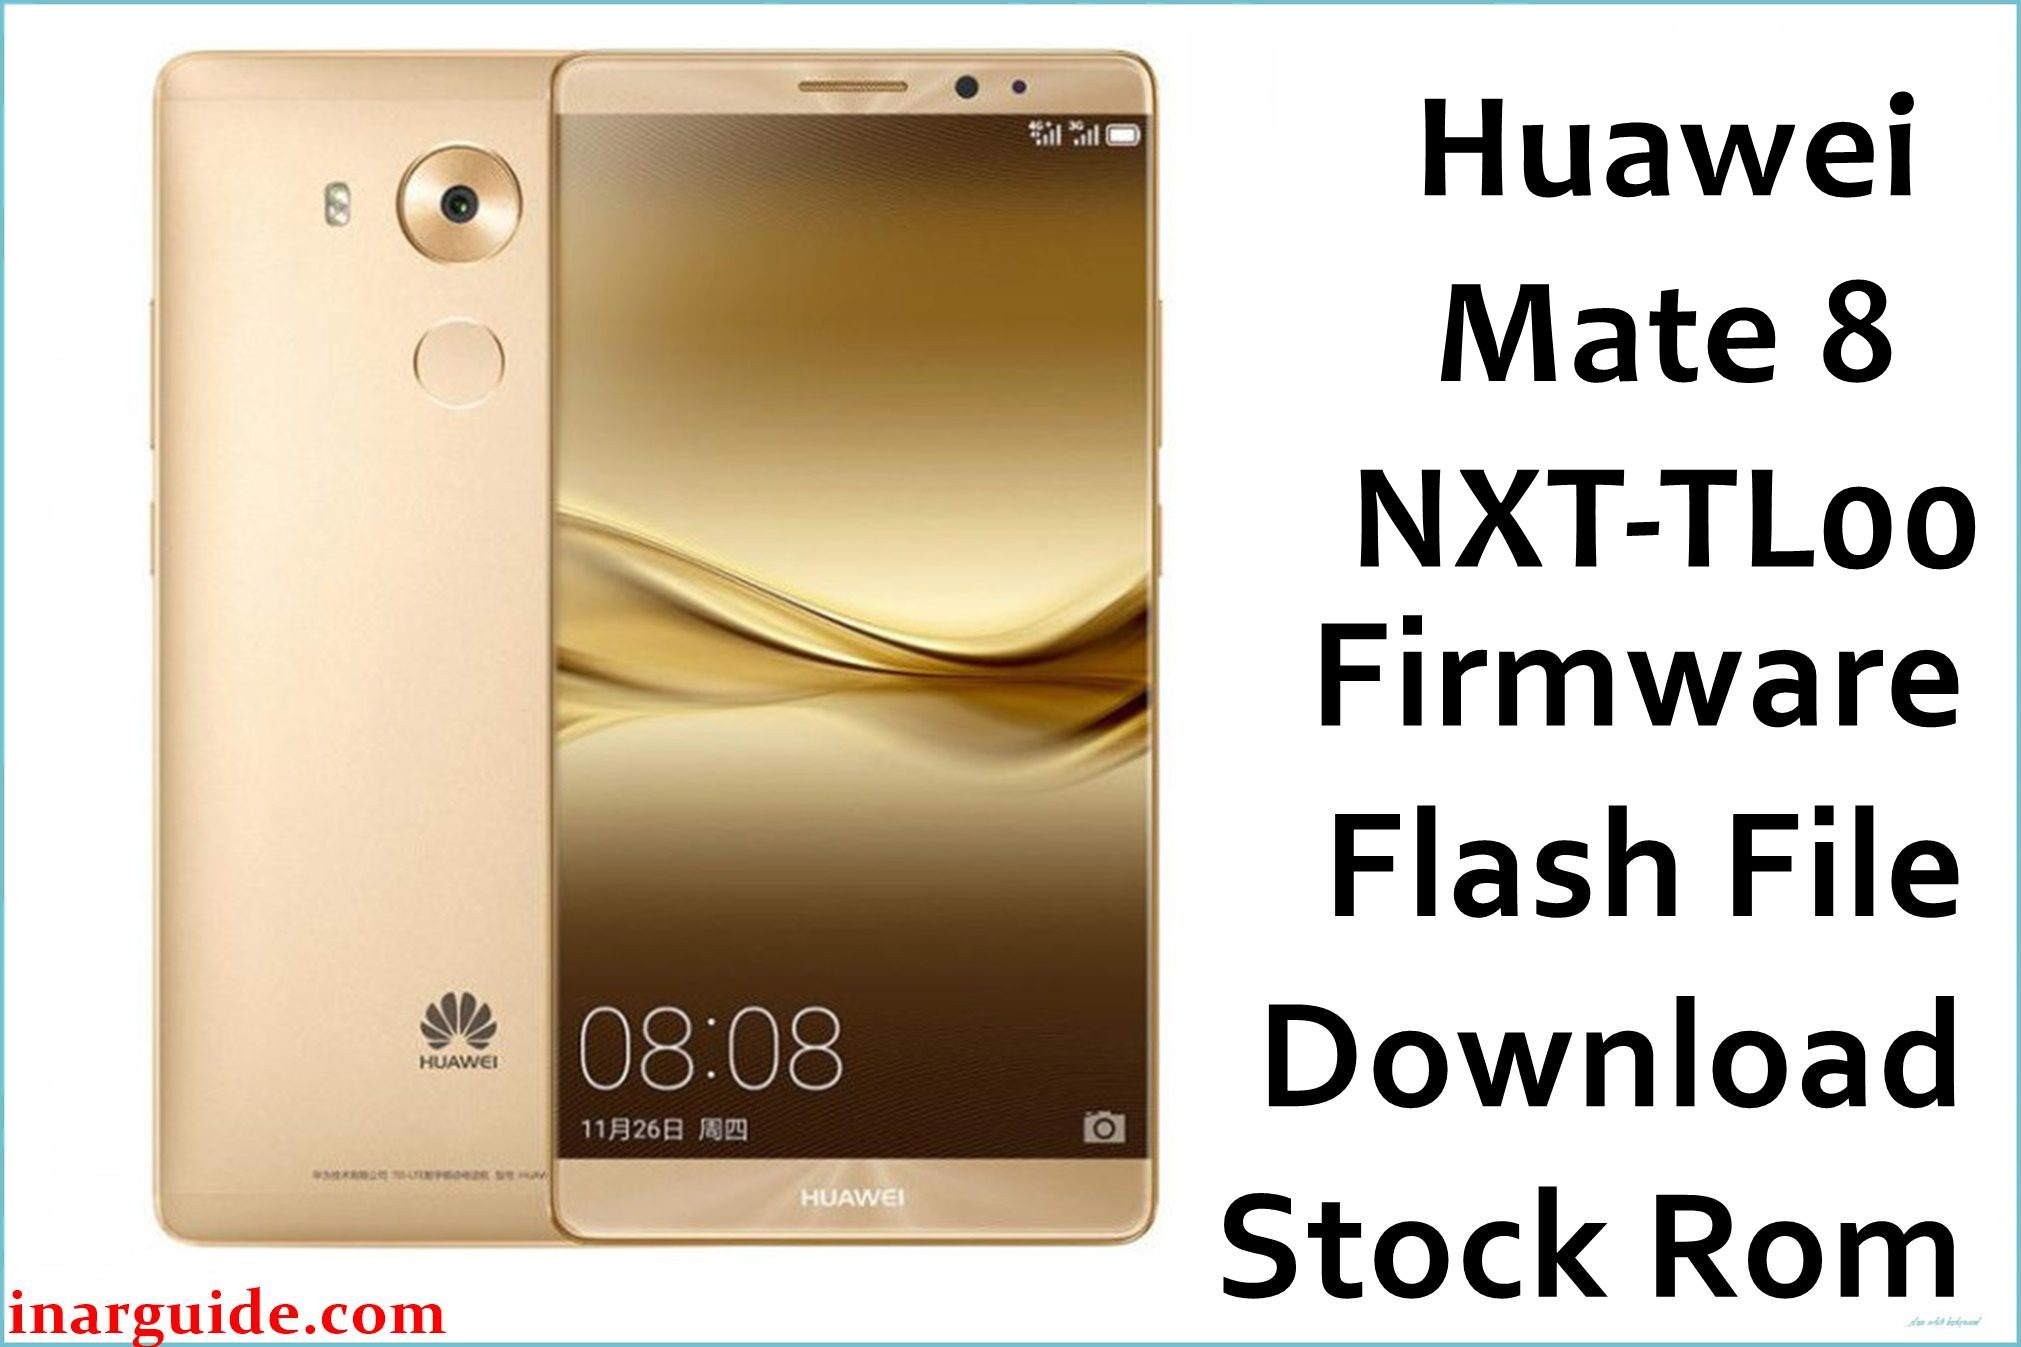 Huawei Mate 8 NXT TL00